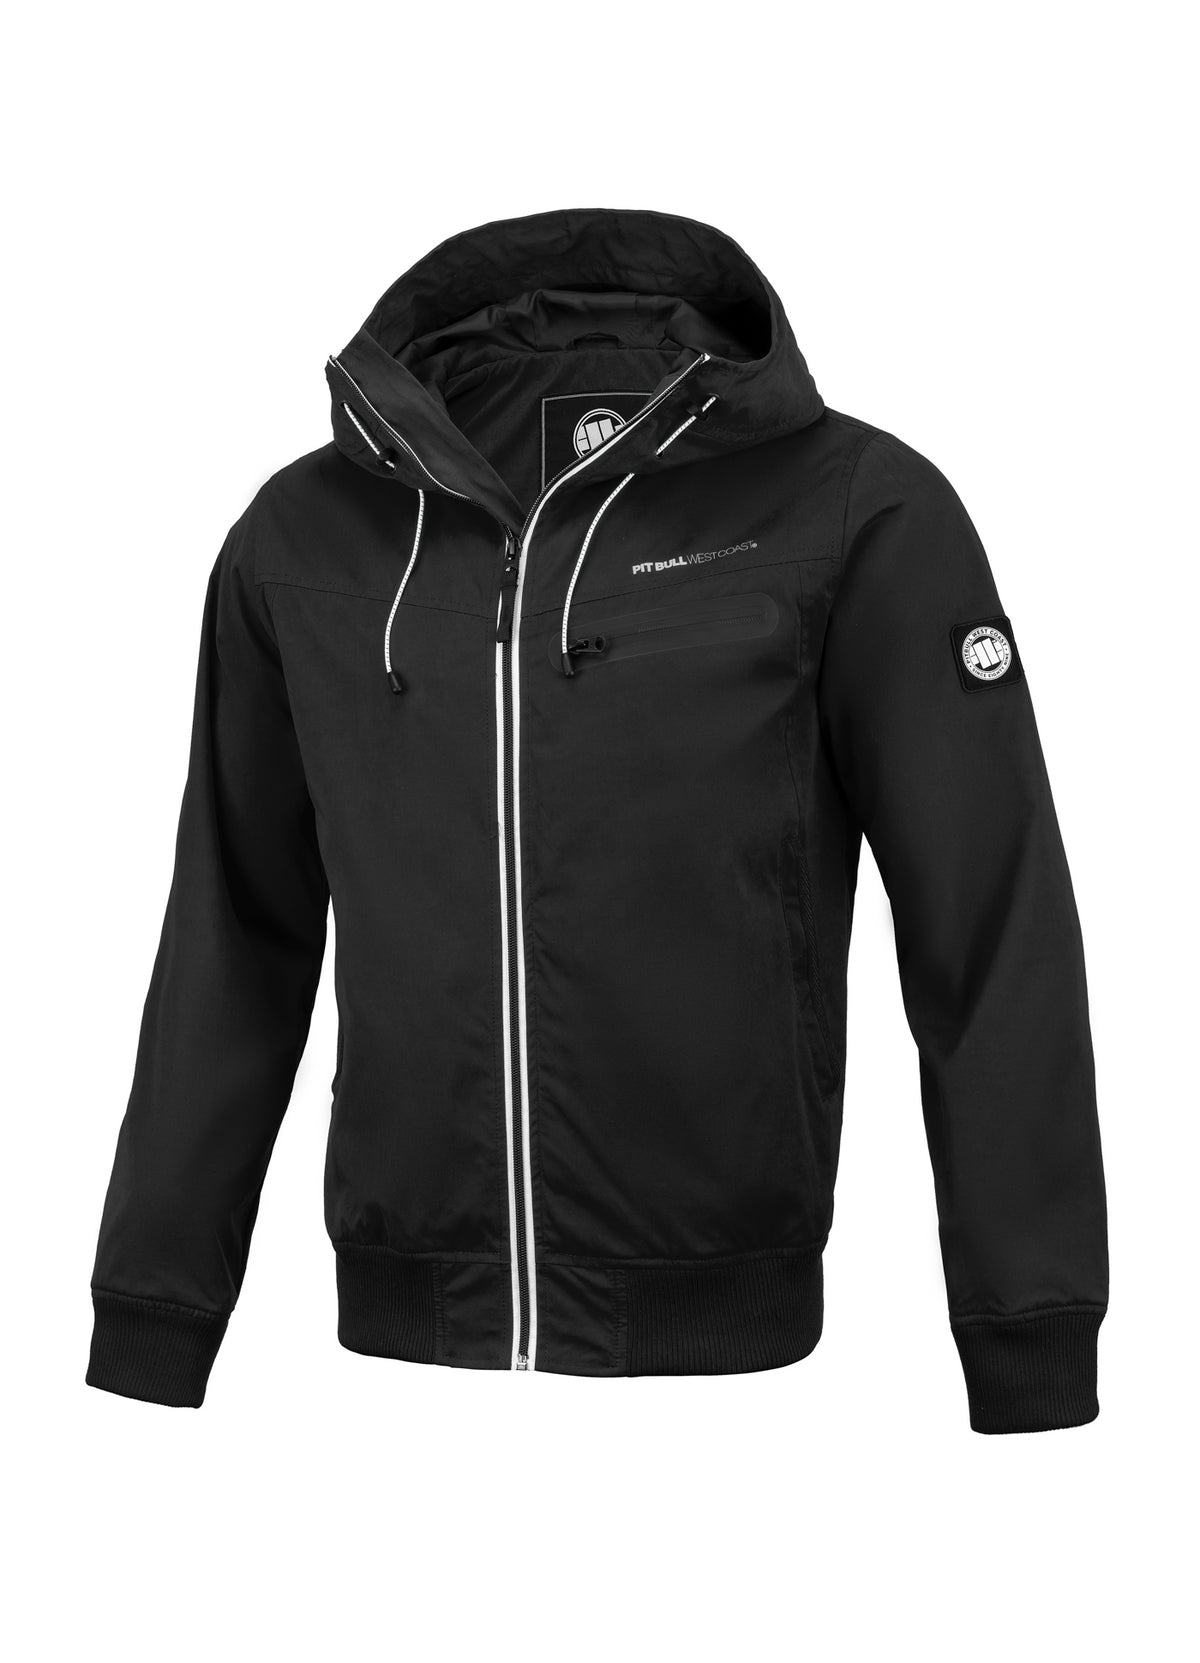 GROTON Hooded Jacket Black - Pitbull West Coast International Store 